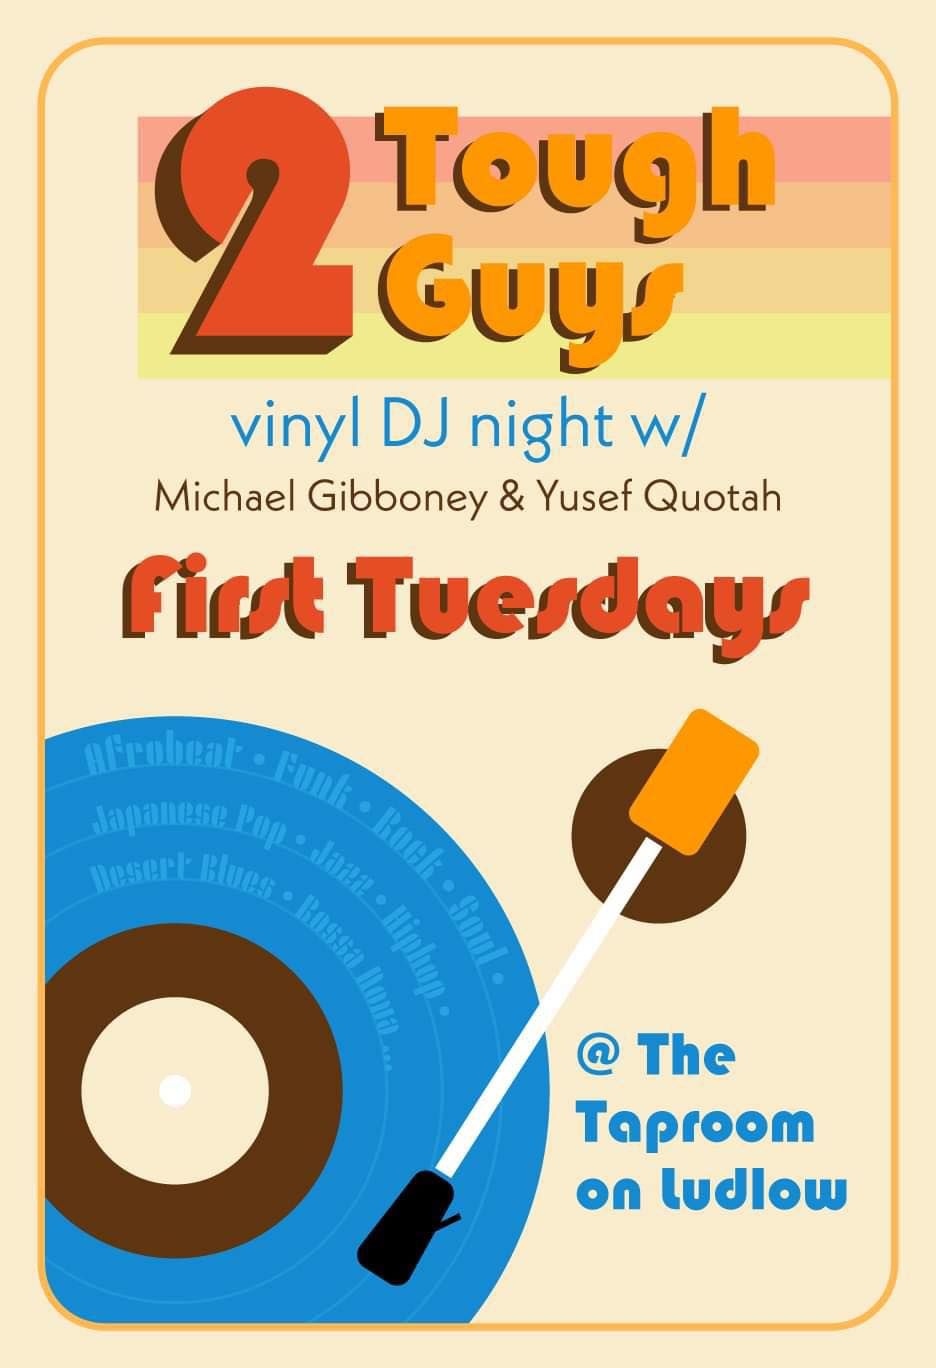 2 Tough Guys: Vinyl DJ Night